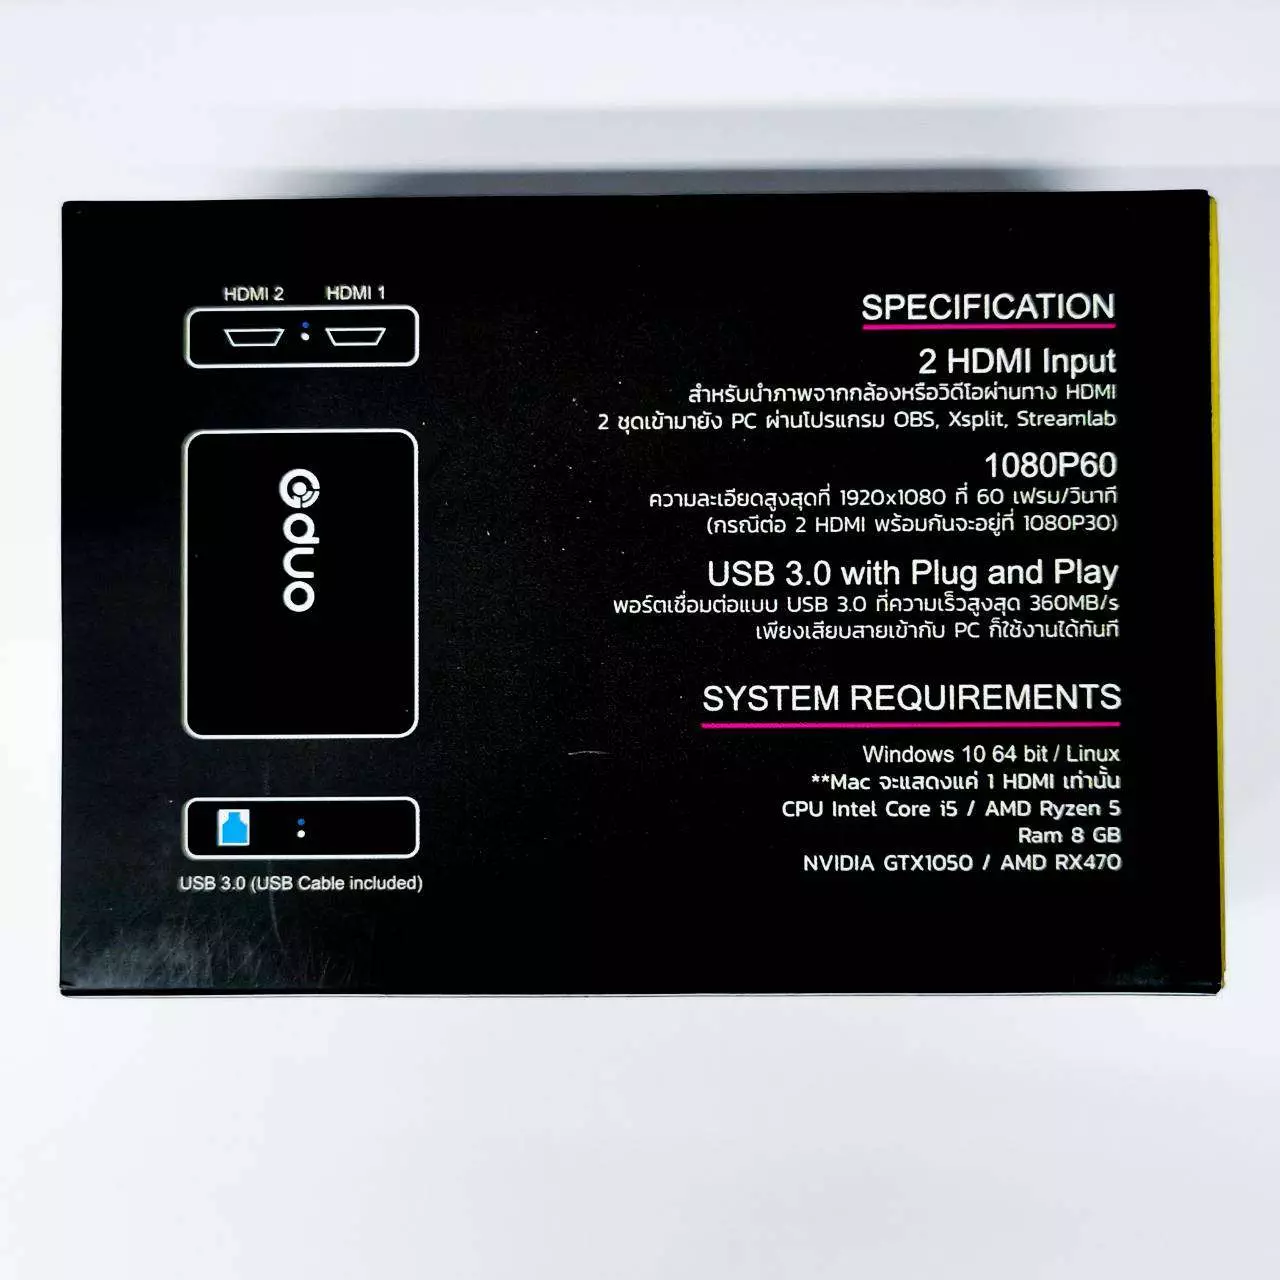 Gera DUO 2 HDMI USB3.0 Video Capture Card 1080P